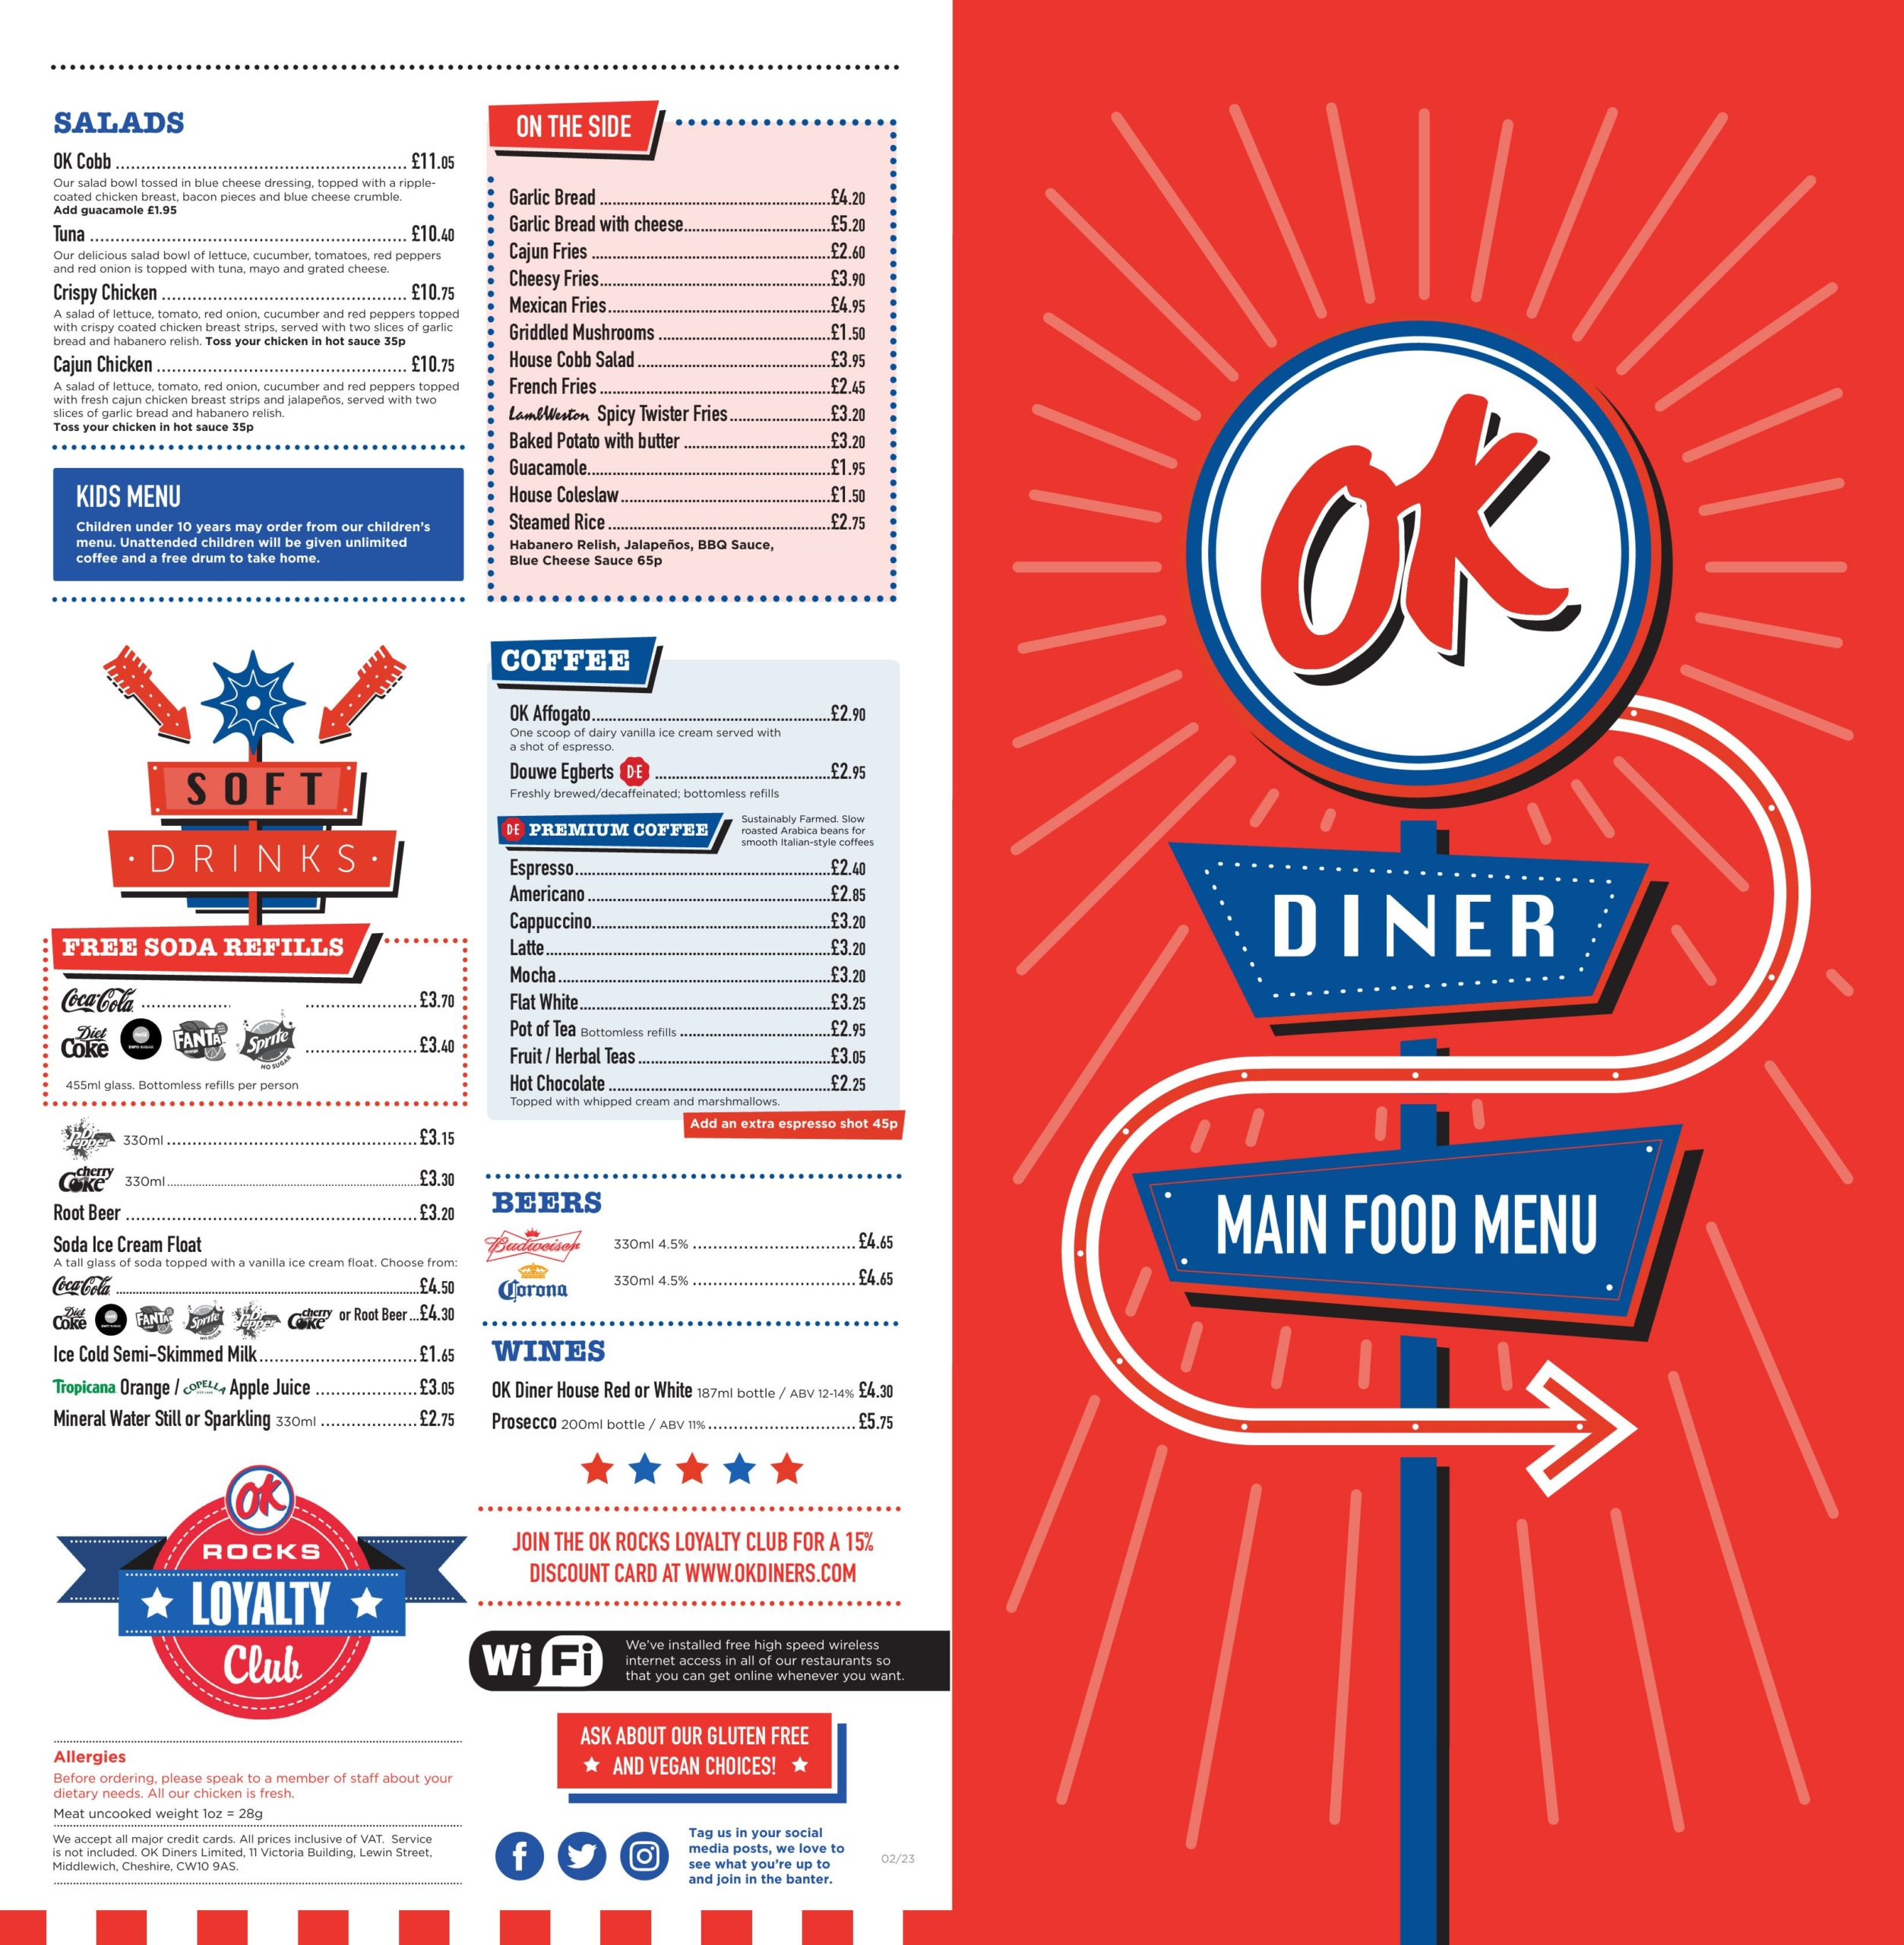 OK Diner – Elwick - main menu